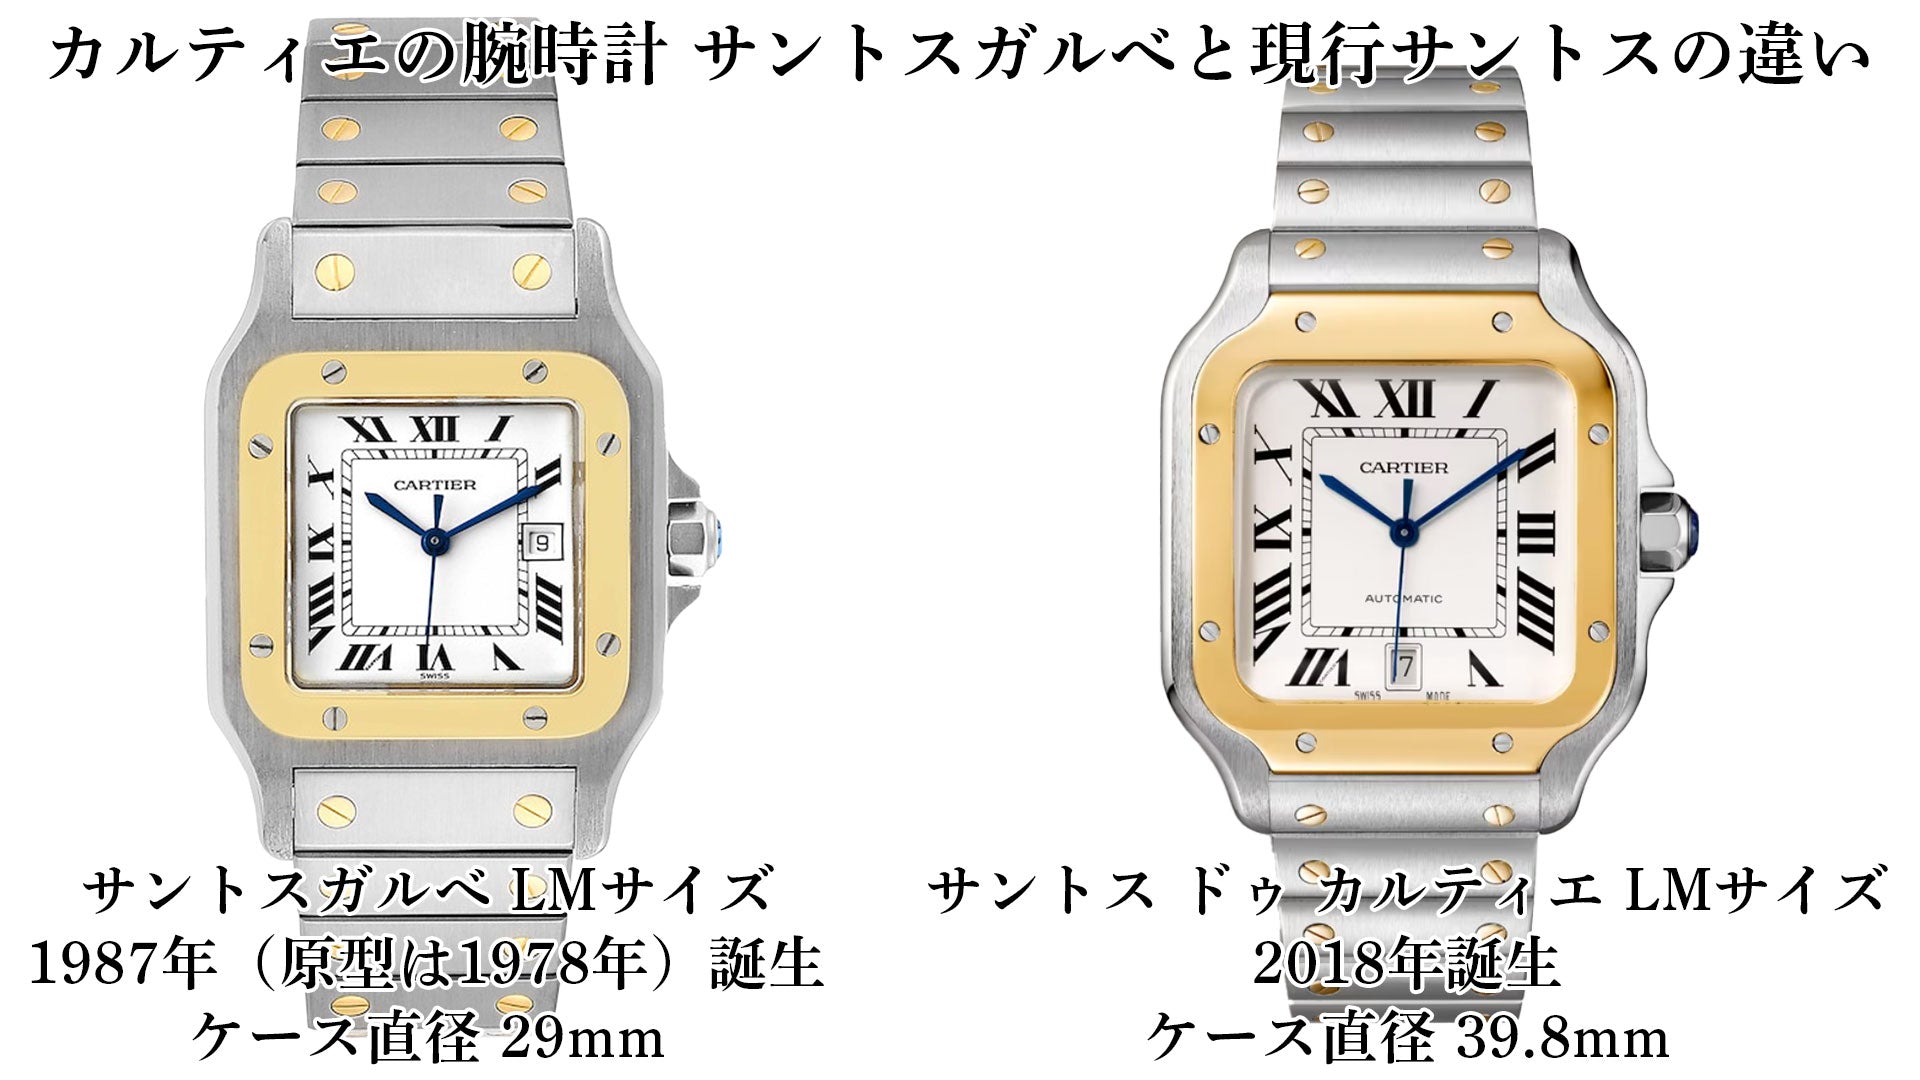 Cartier watches: Differences in size between Santos Galbe and Santos de Cartier